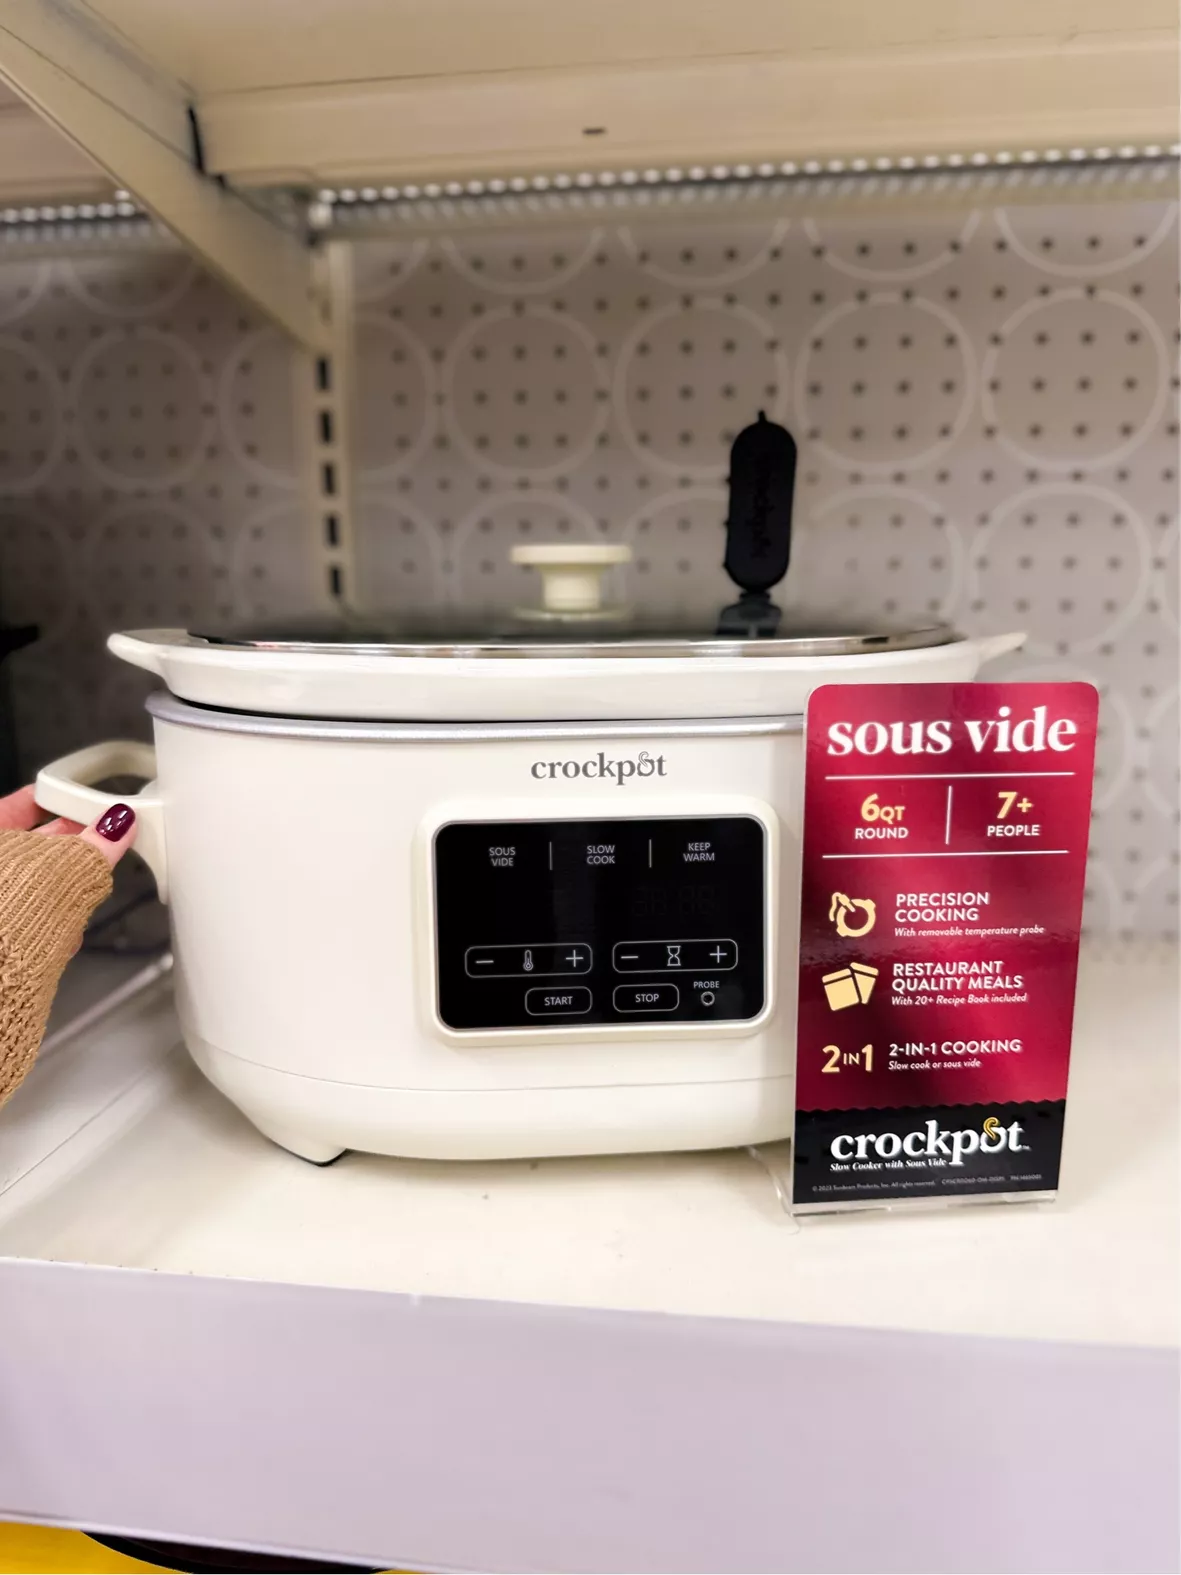 Crock Pot vs Sous Vide Slow Cooker - Which is Better?